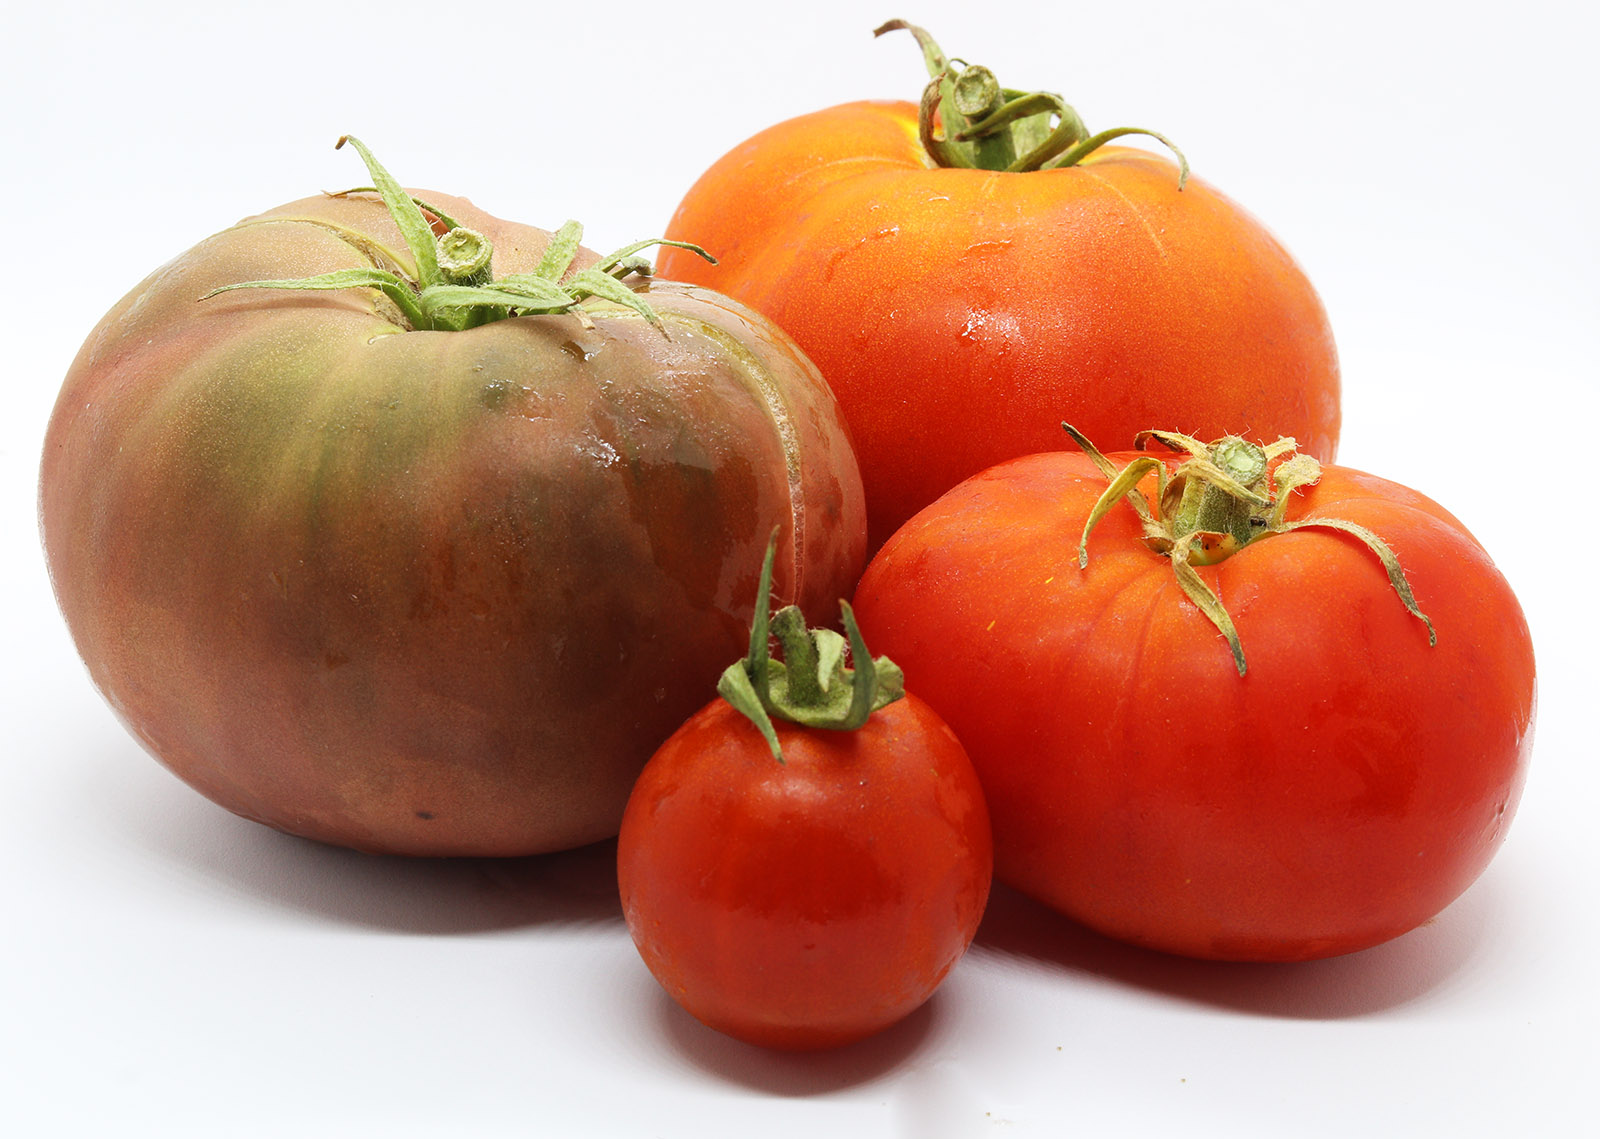 Tomatoes 3 s.jpg